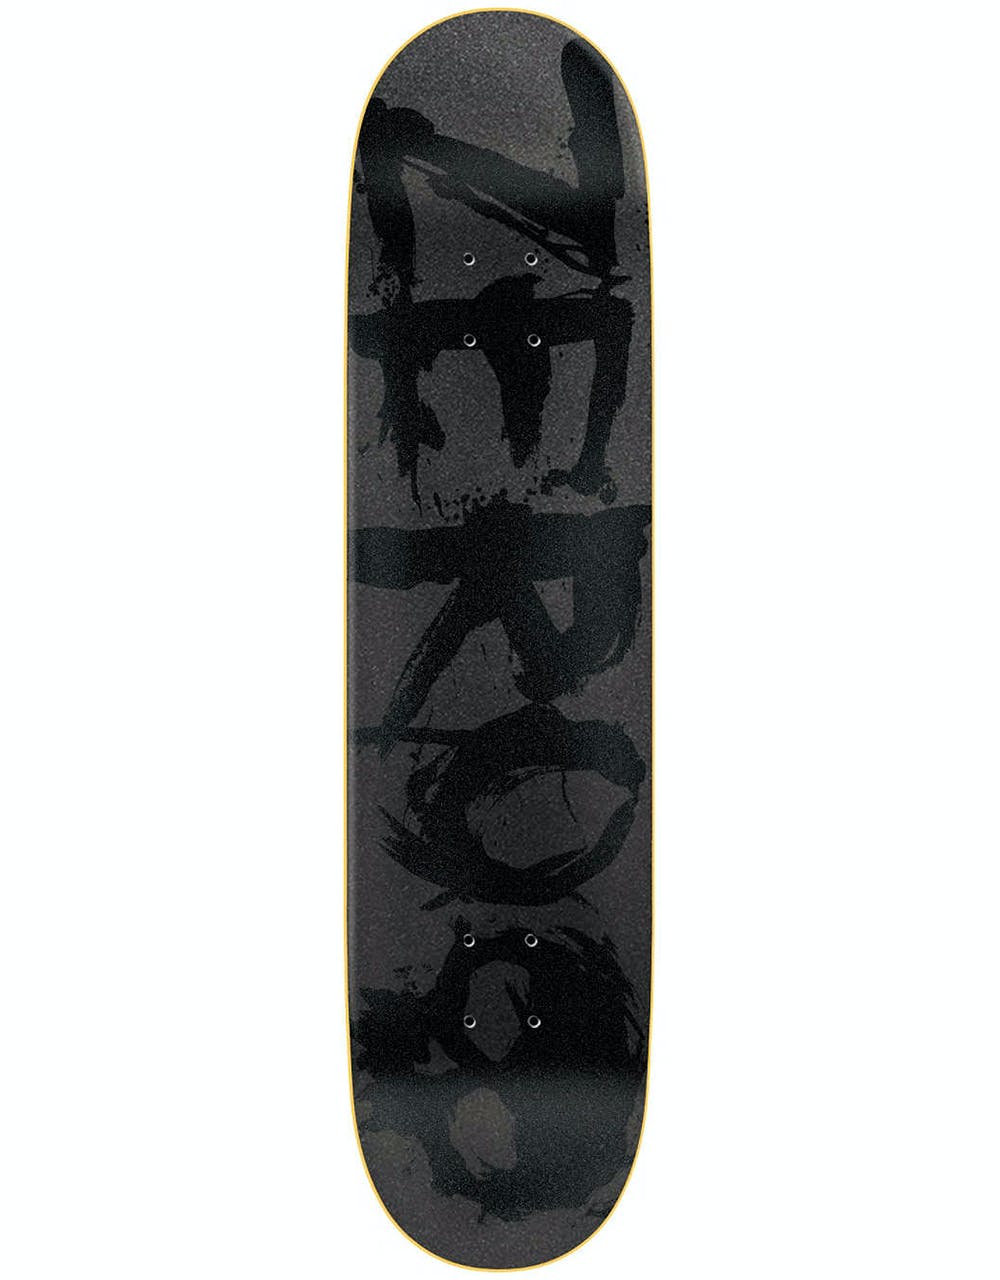 Zero OG Font Complete Skateboard - 7.625"